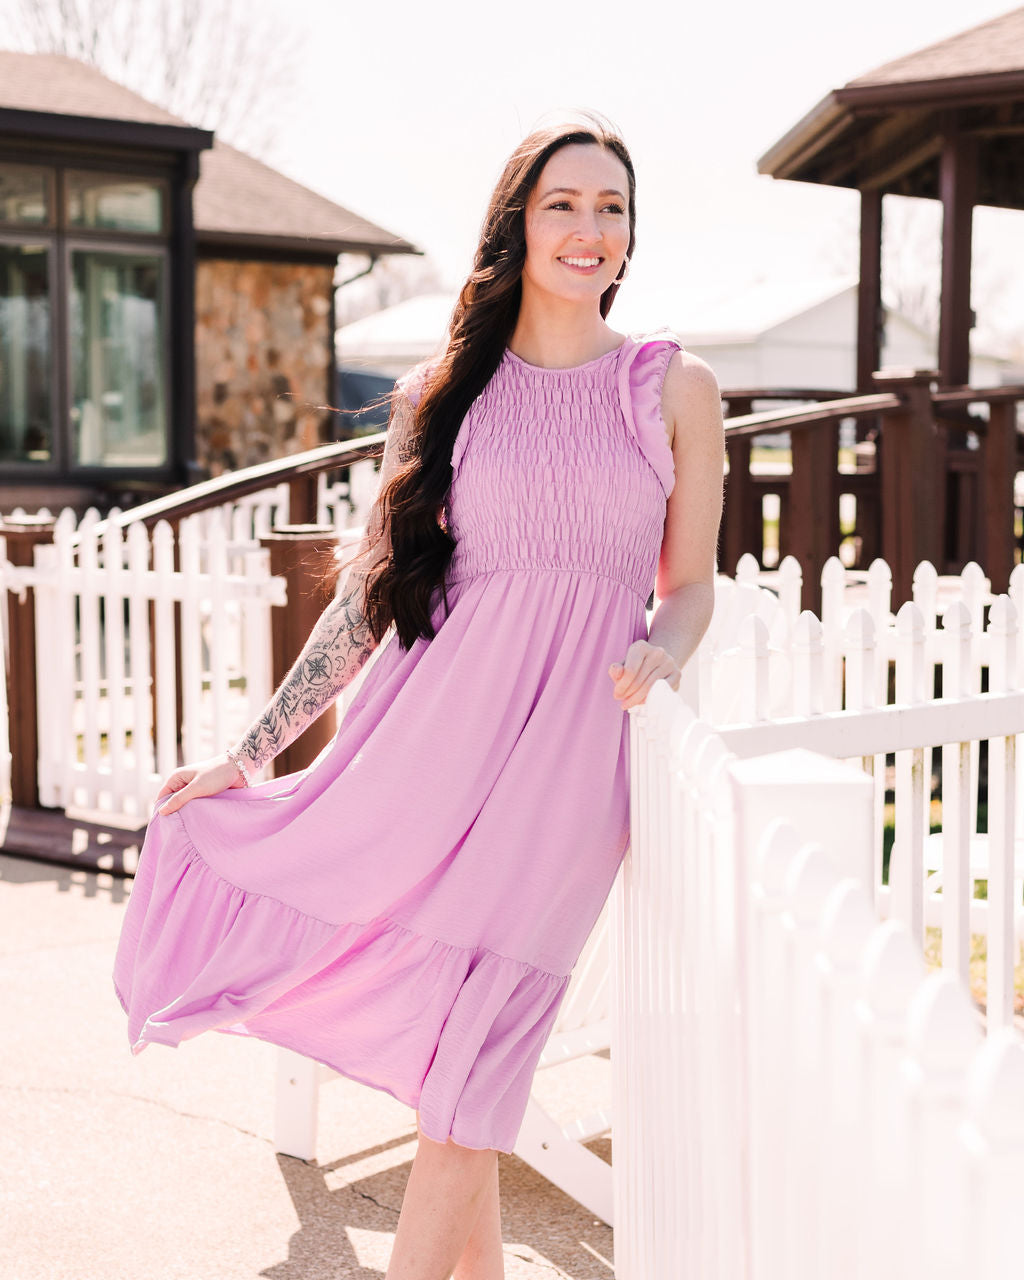 Lavender Love Dress